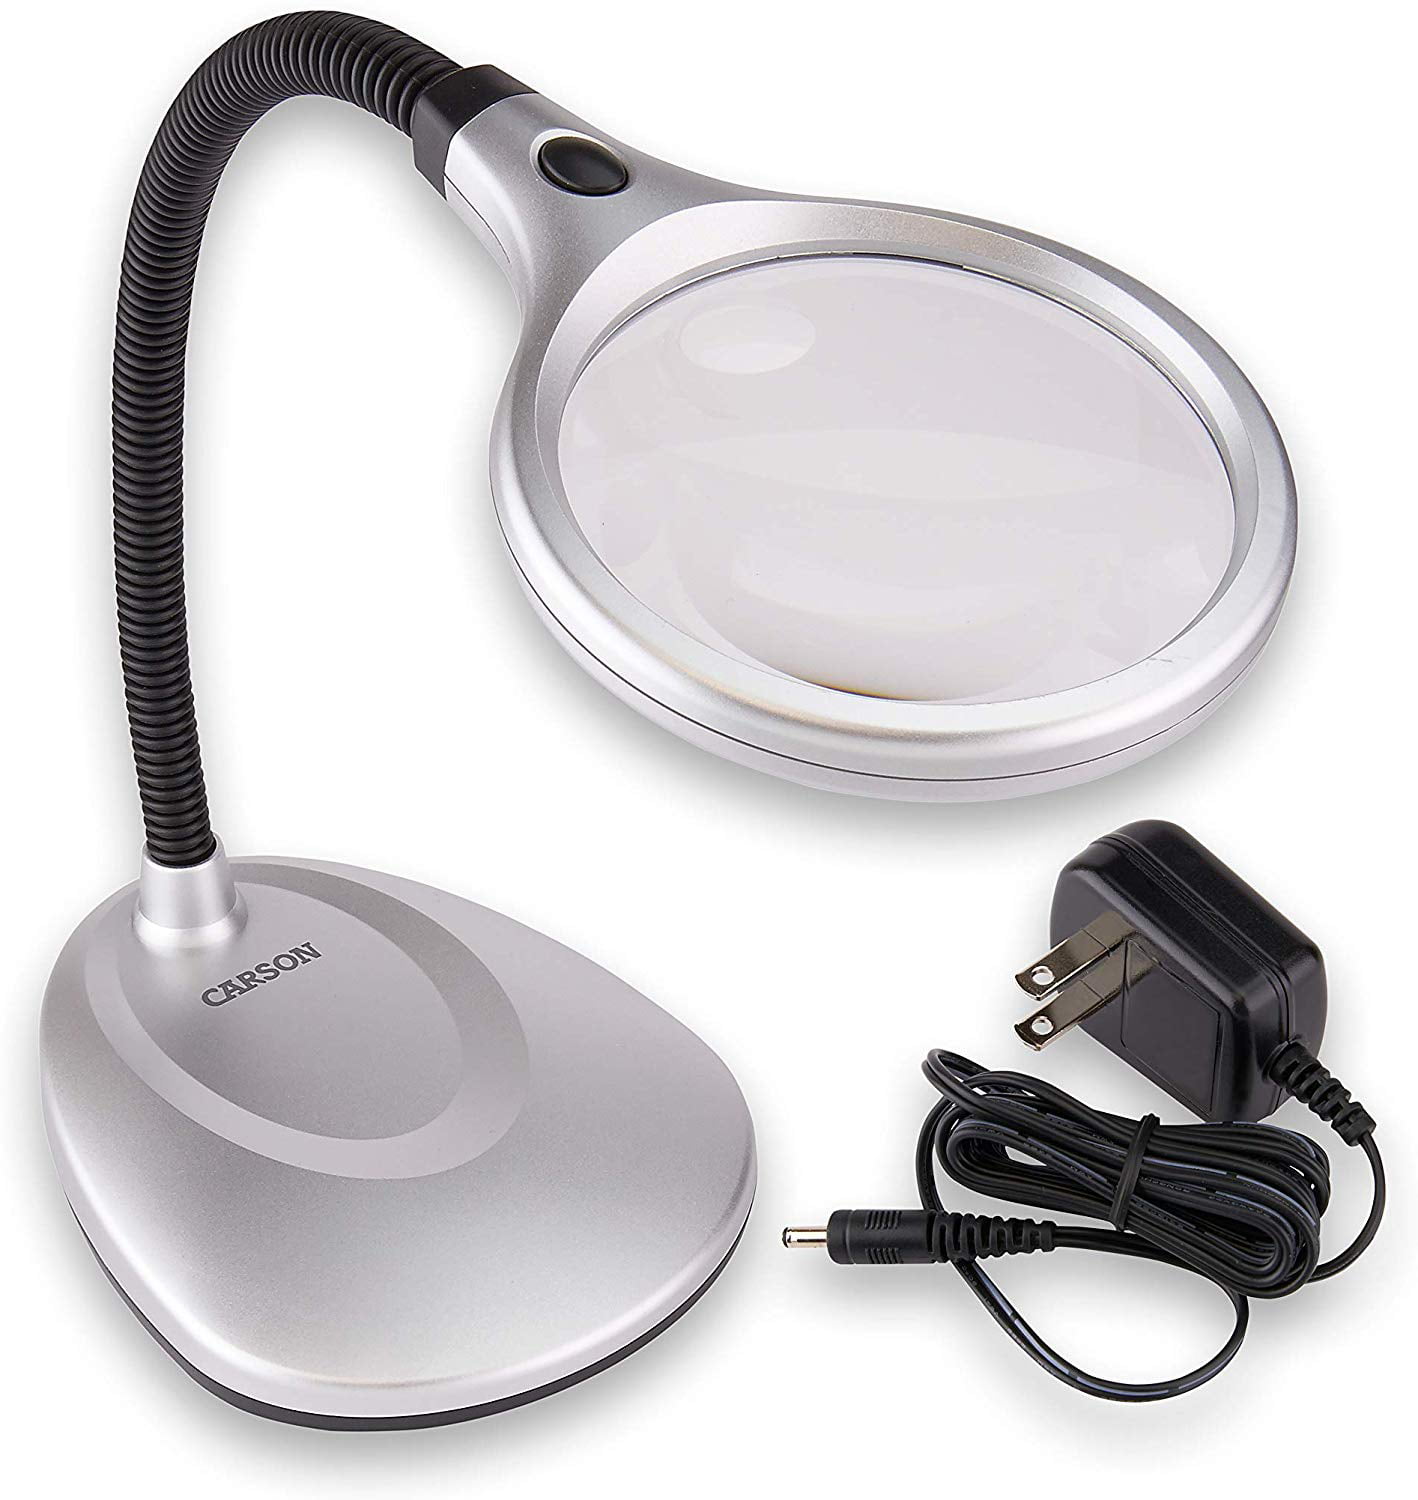 DeskBrite 200 LED Illuminated 2X Magnifier & Desk Lamp (LM-20), The